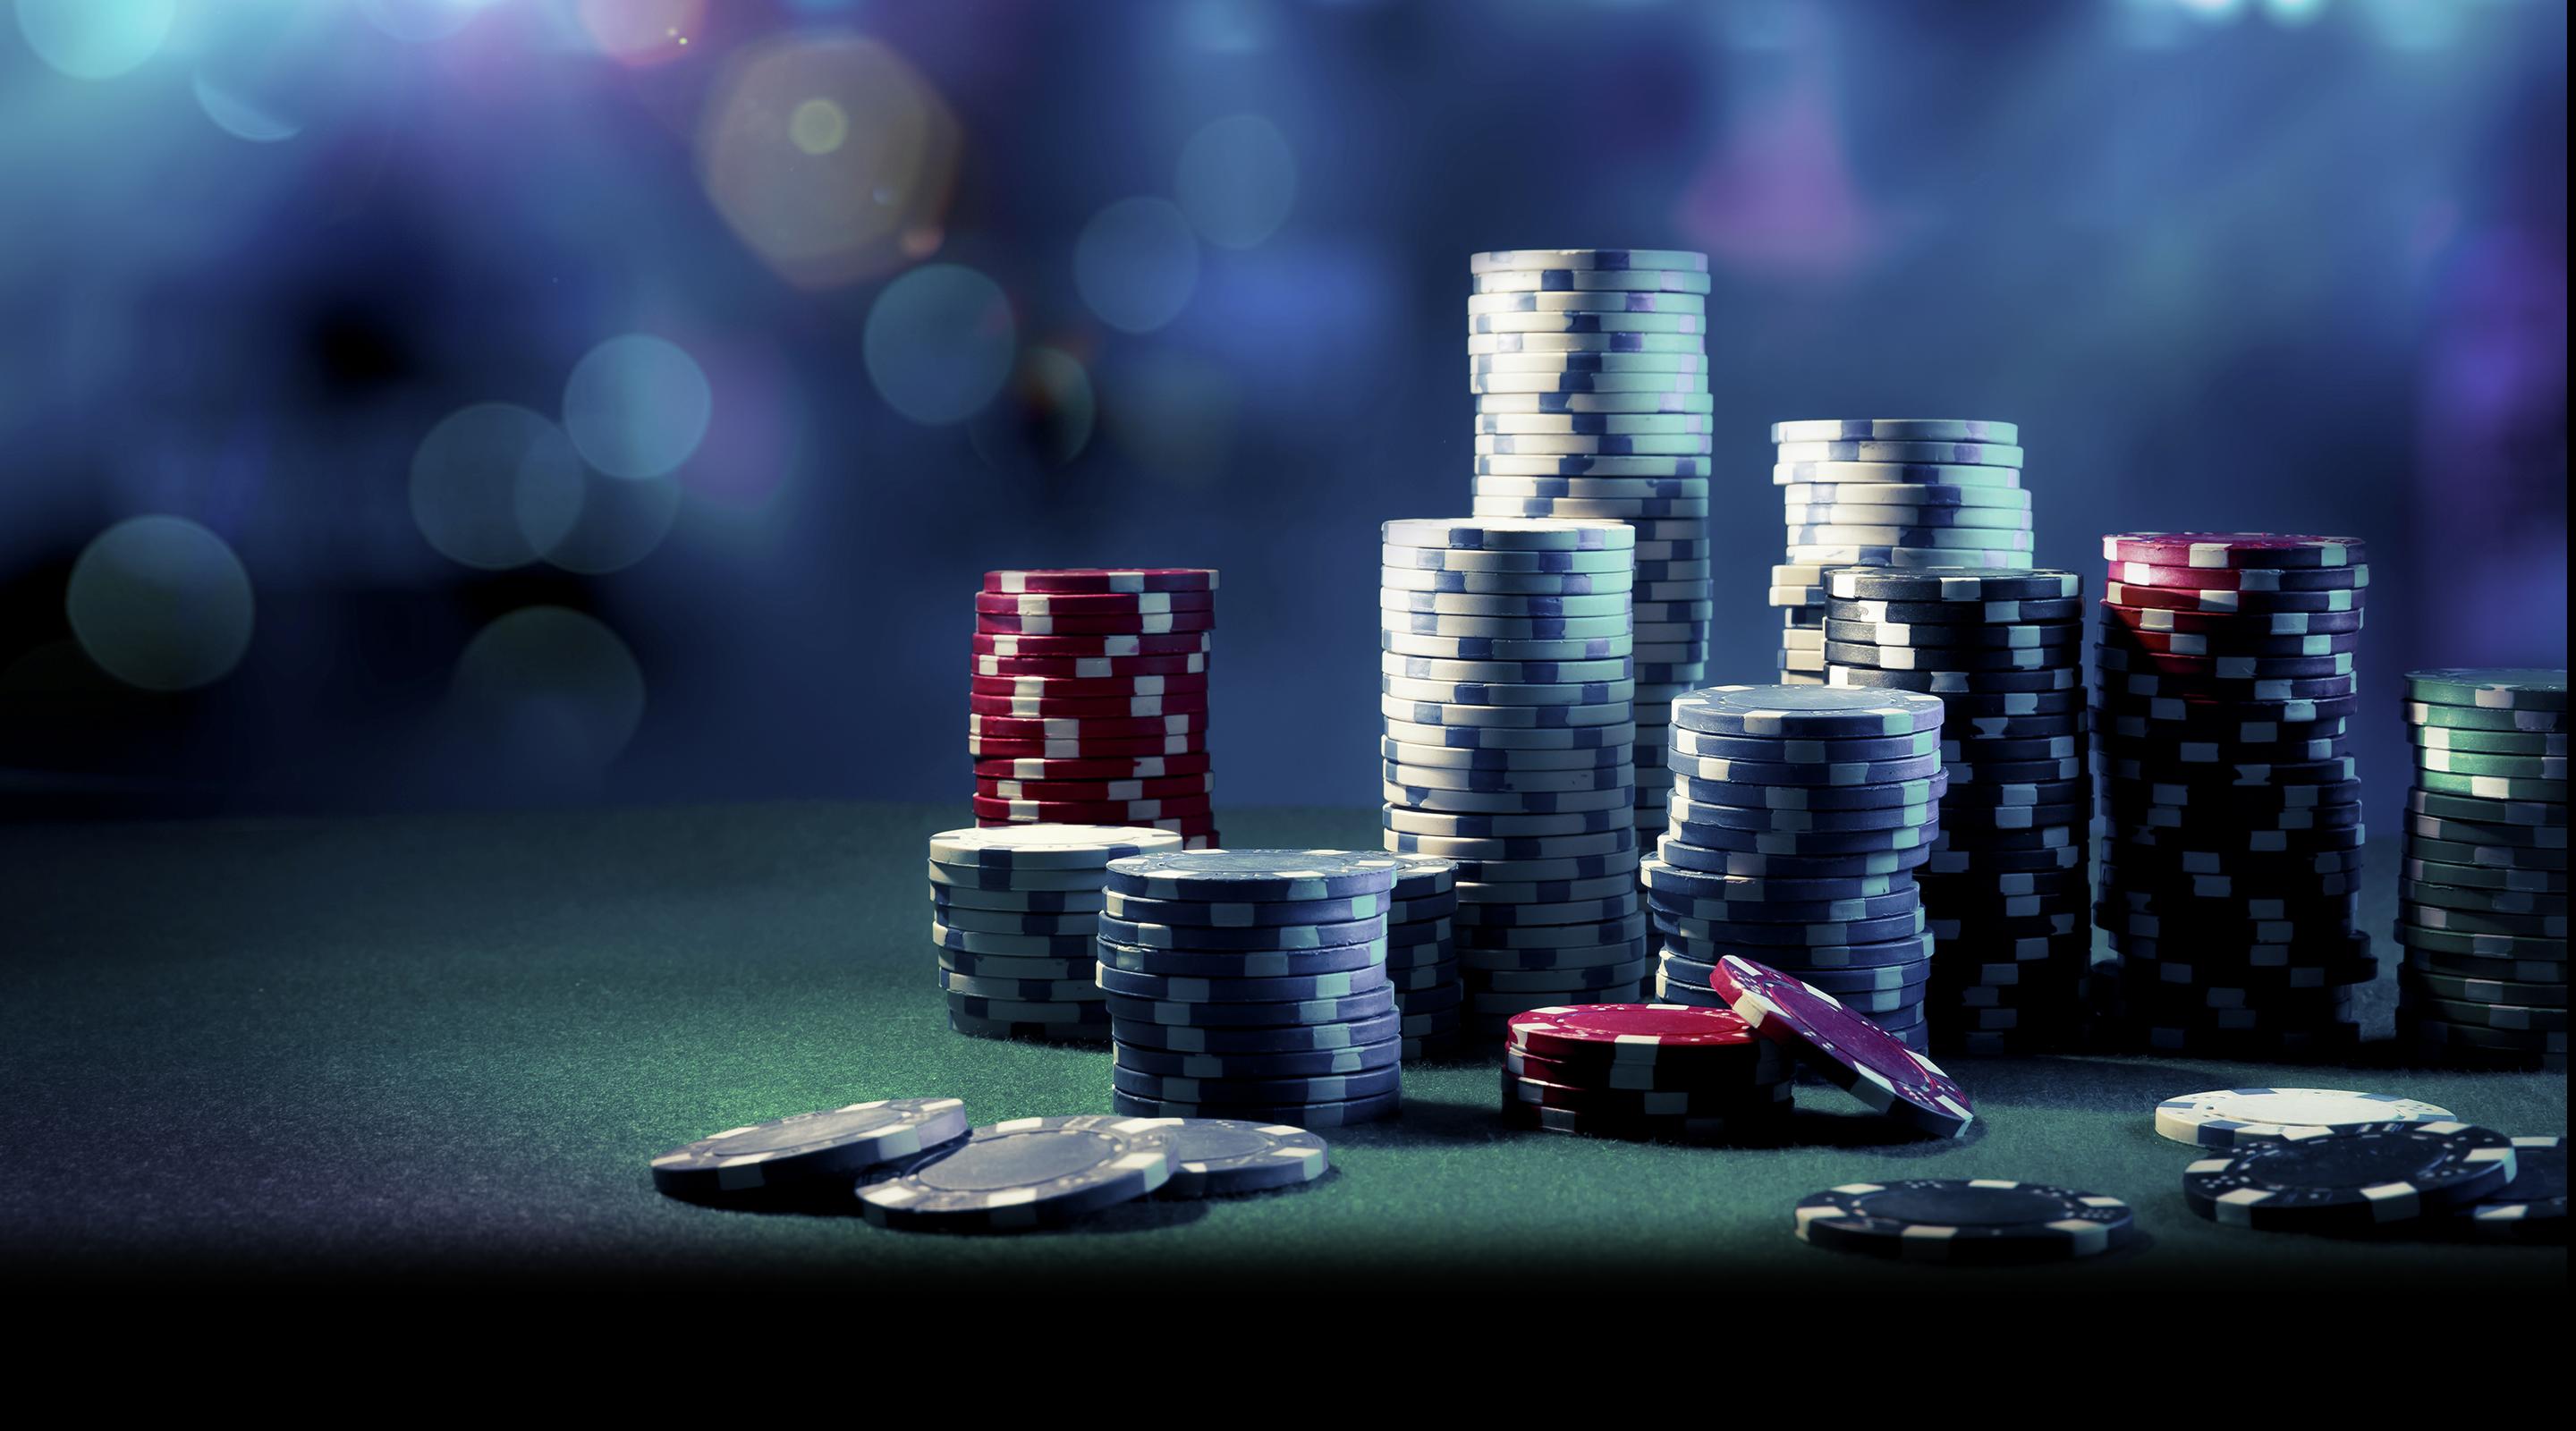 excalibur-casino-poker-chips.tif